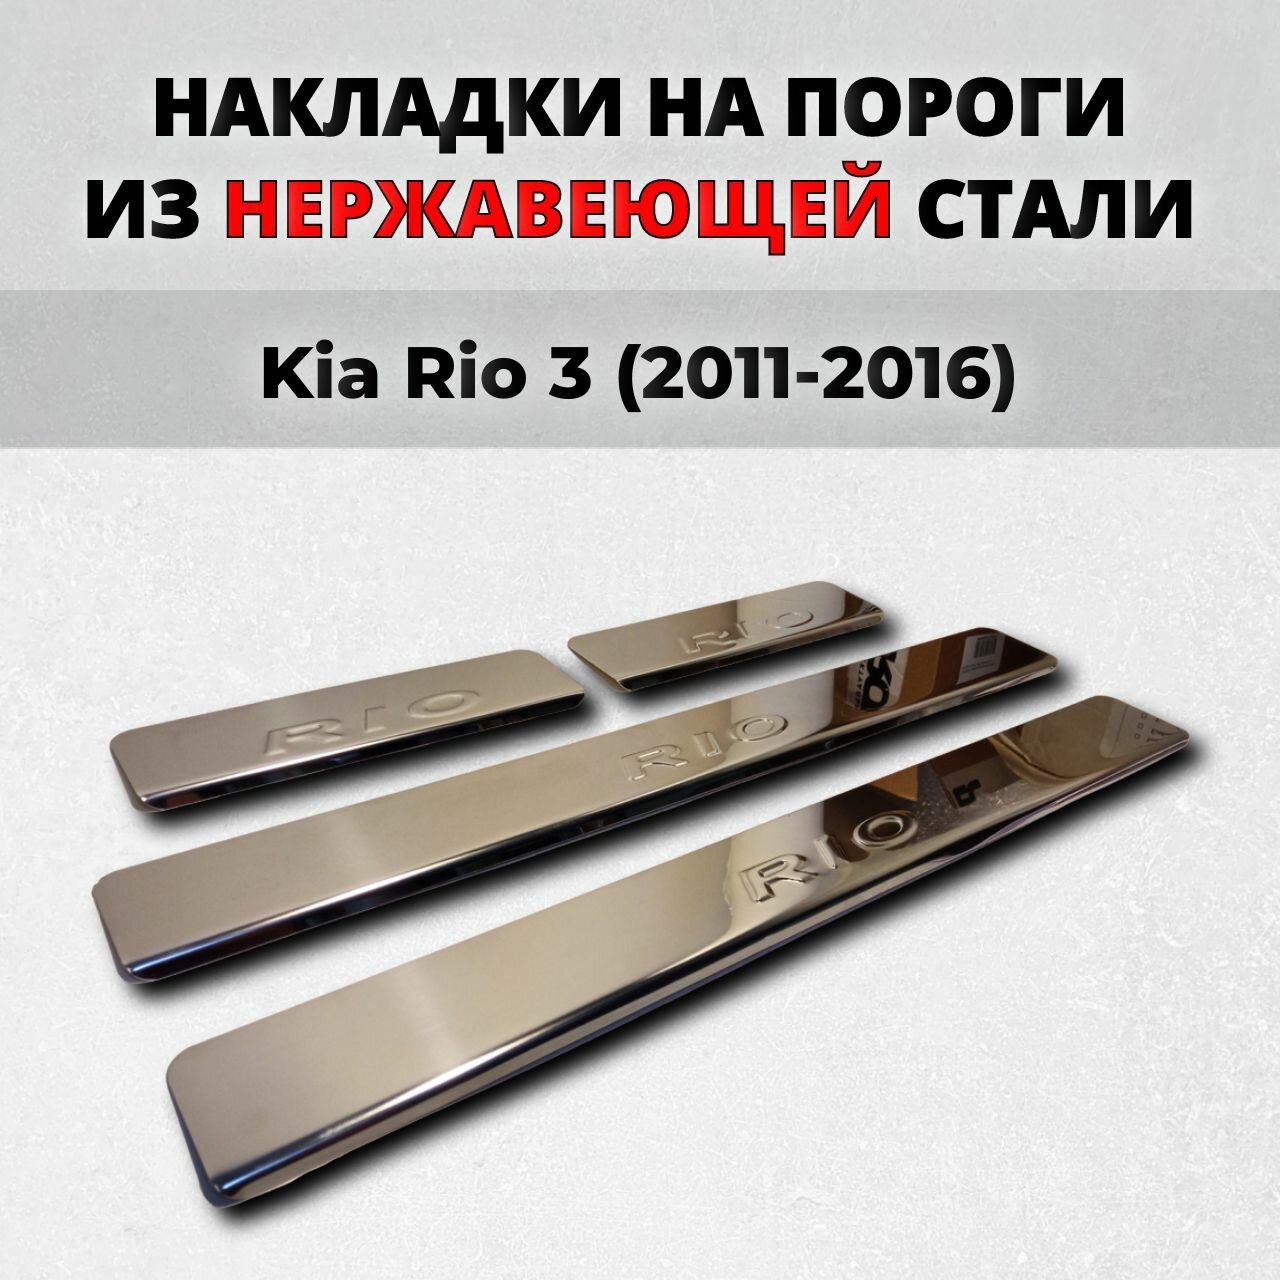 Накладки на пороги Киа Рио 3 2011-2016 из нержавеющей стали Kia Rio 3